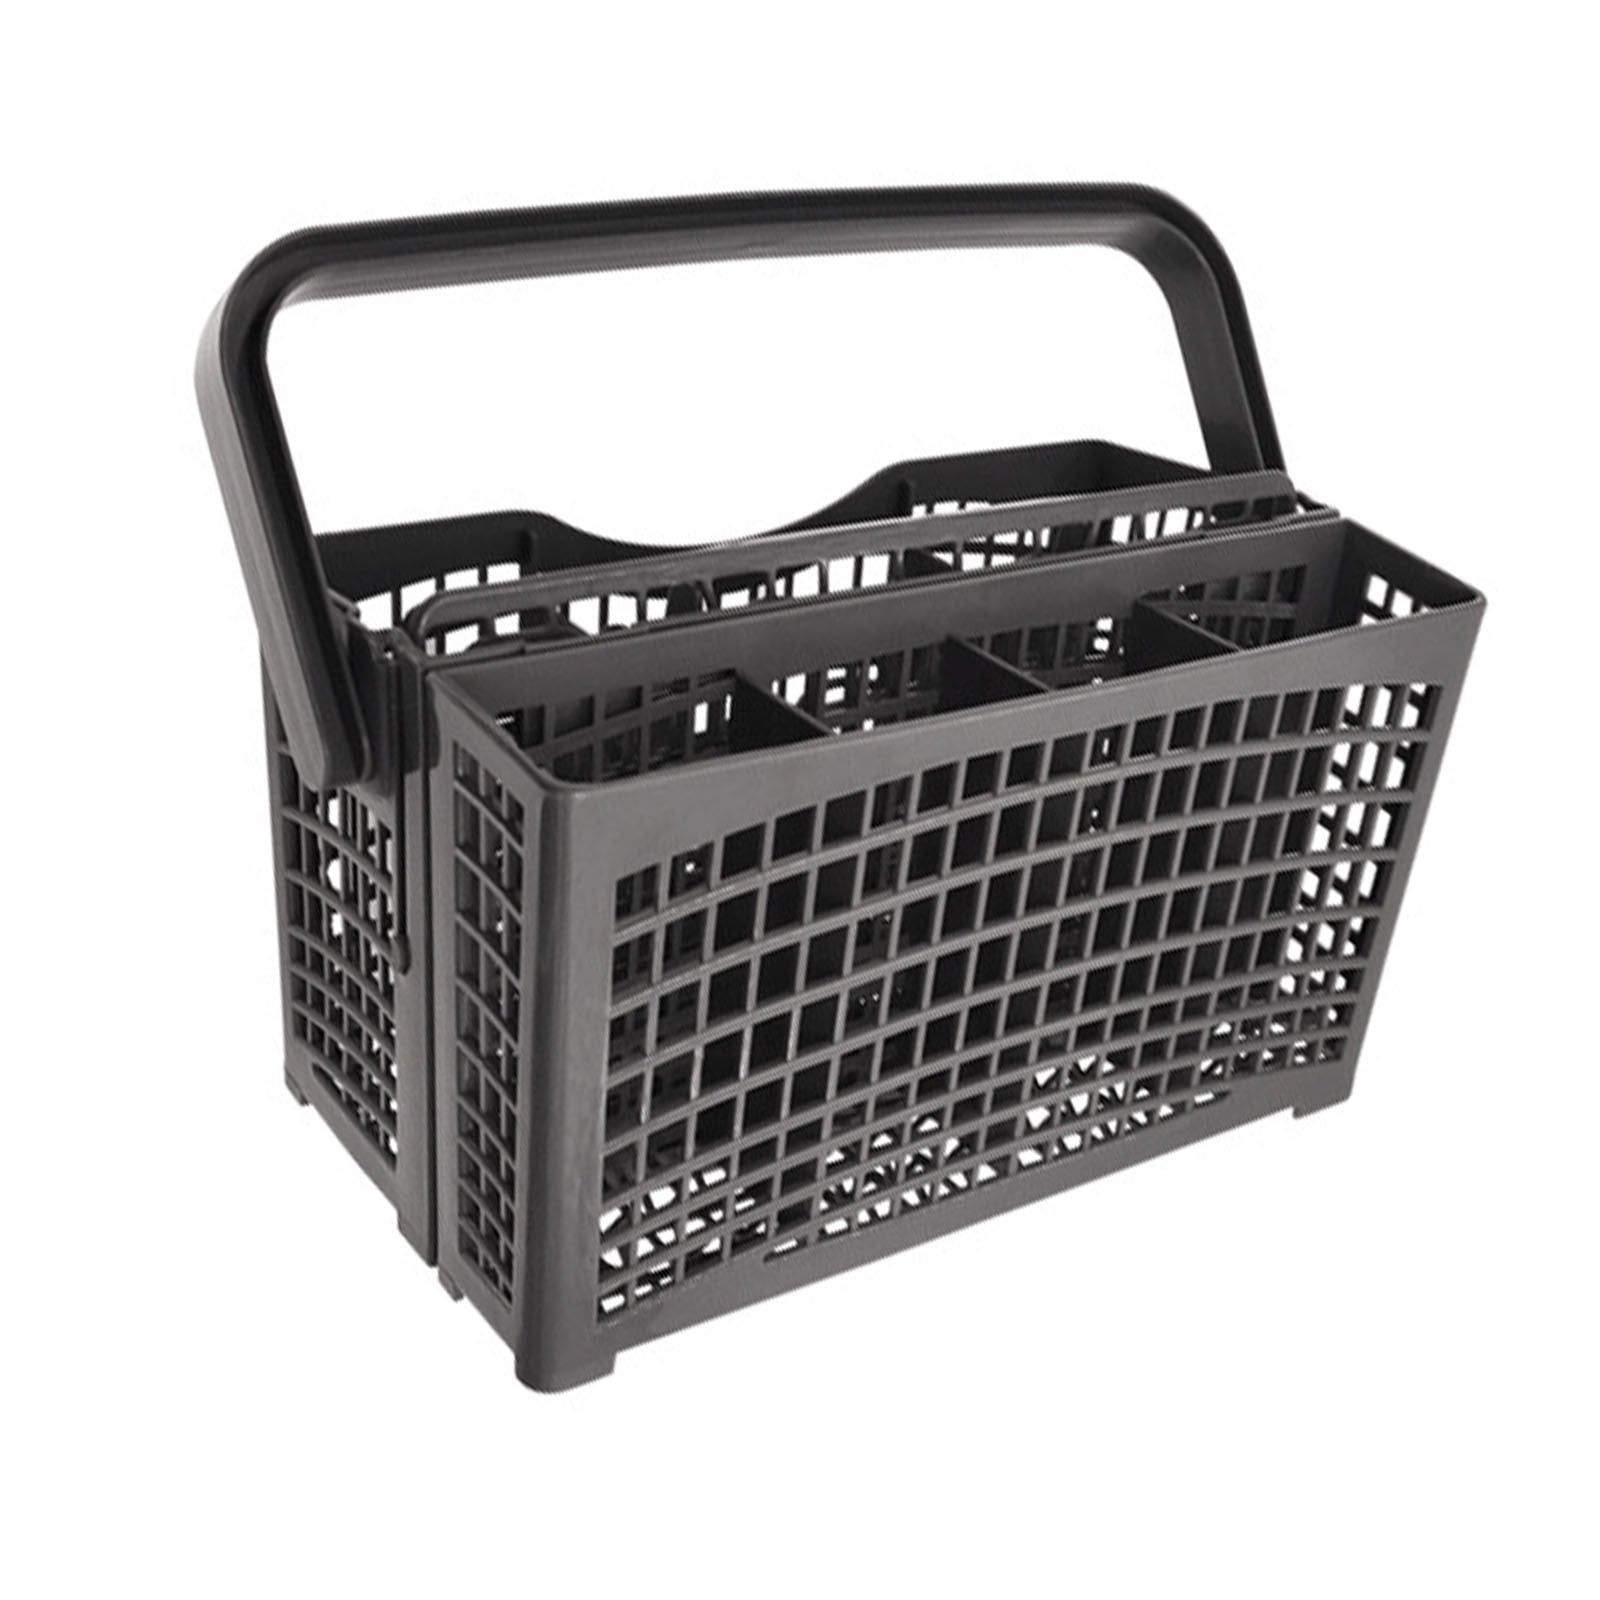 8 x Dishwasher Lower basket wheels fit AEG Bendix Firenzi John Lewis Tricity 